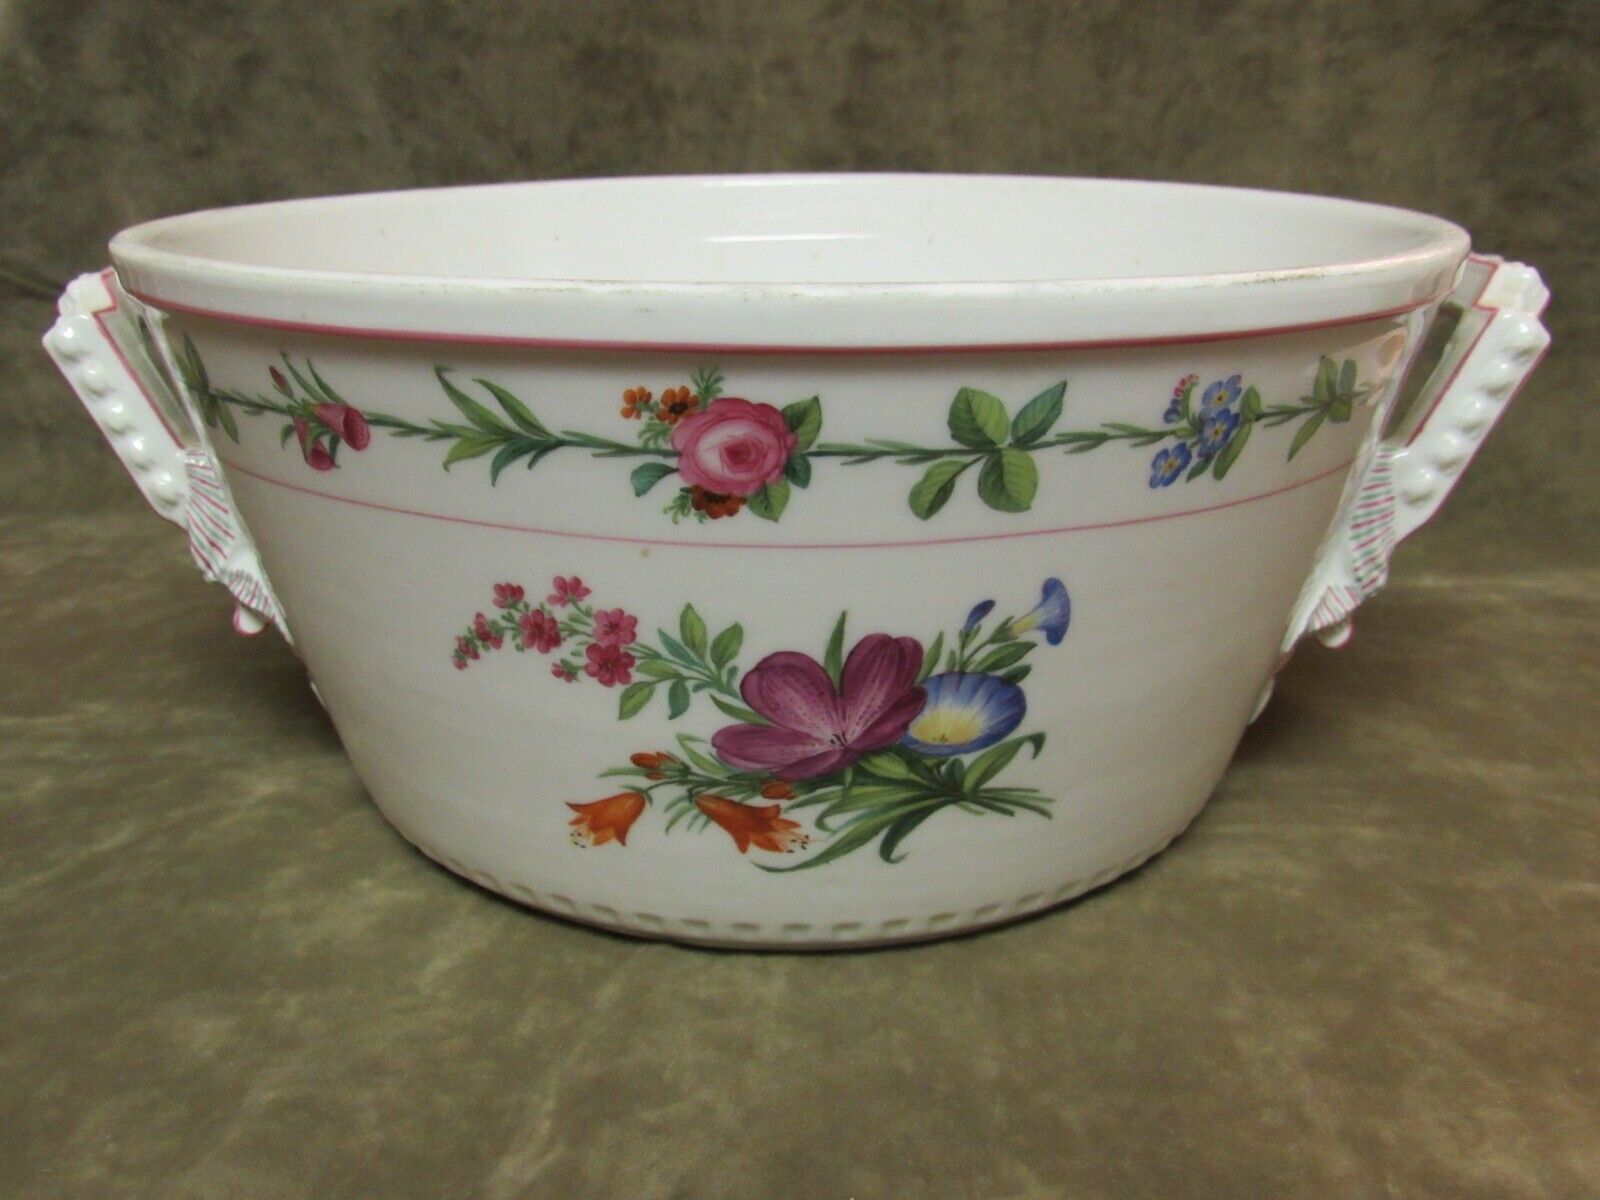 Circa 1815 KPM Berlin Porcelain Sceptre Mark Hand Painted Floral Bowl Vase